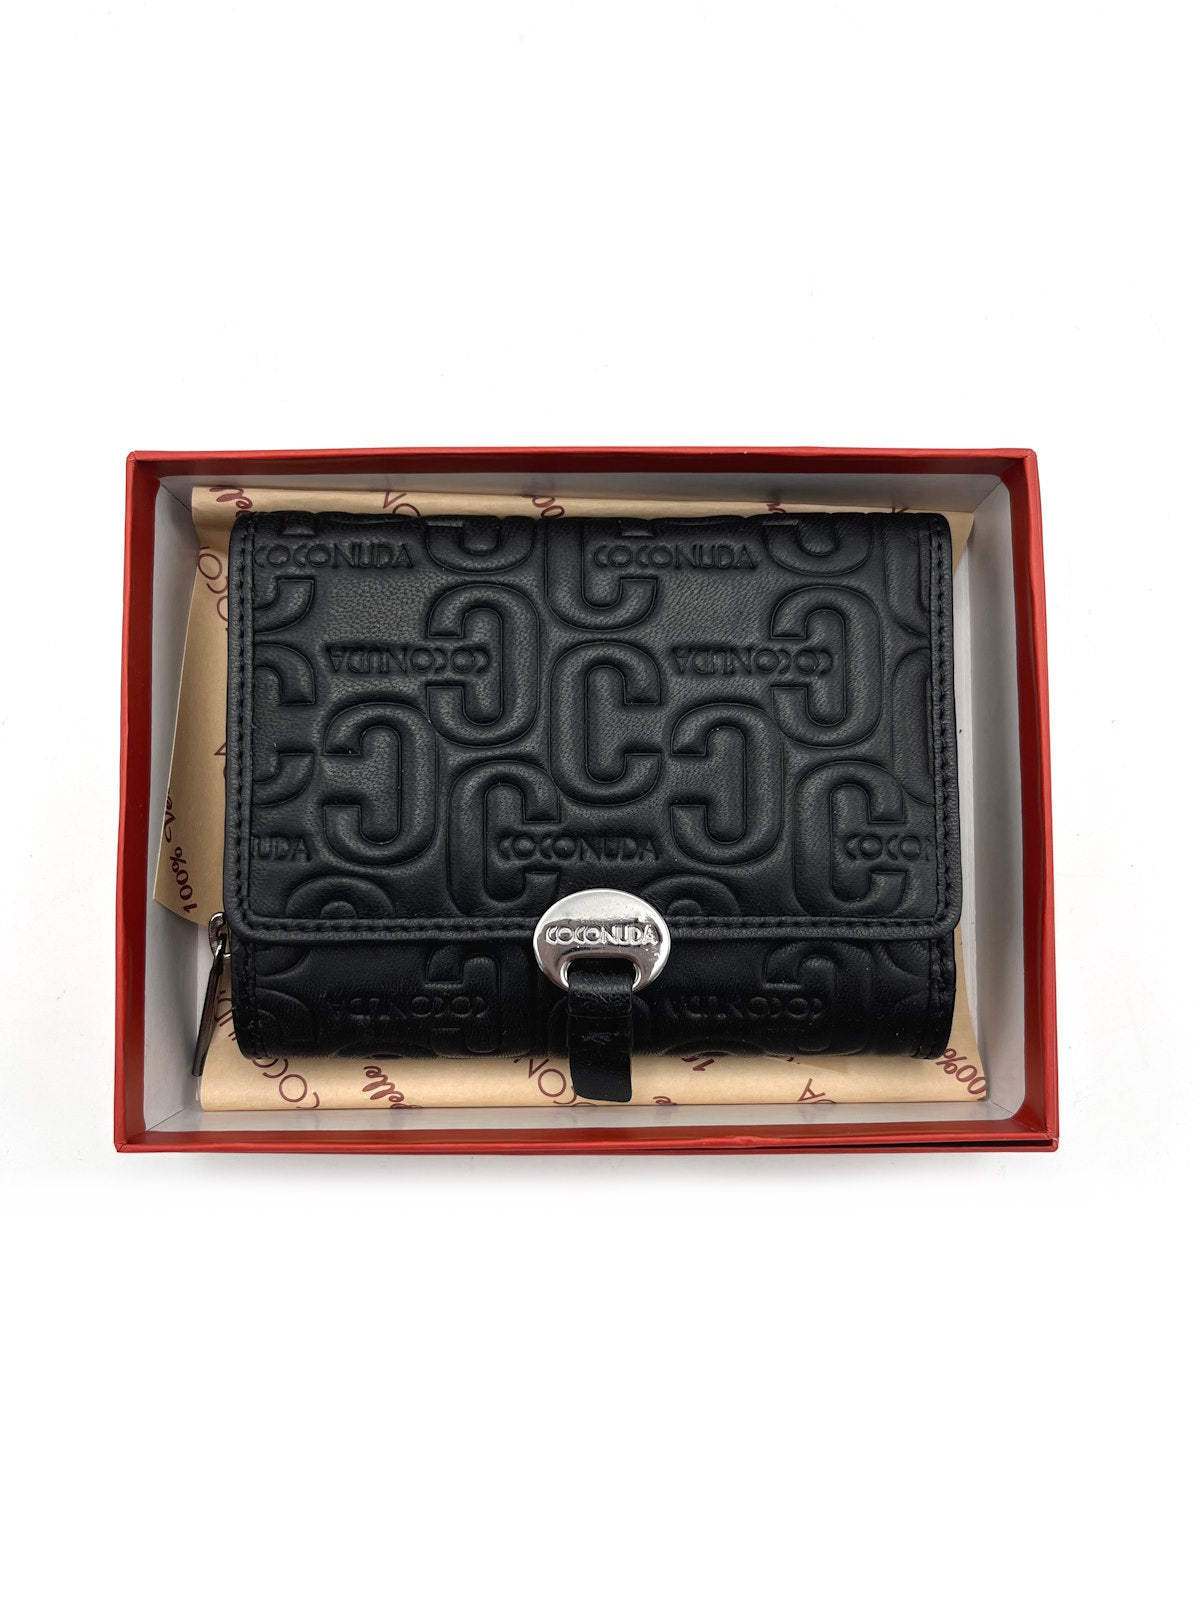 Genuine leather wallet, Coconuda for women, art. PDK322-60